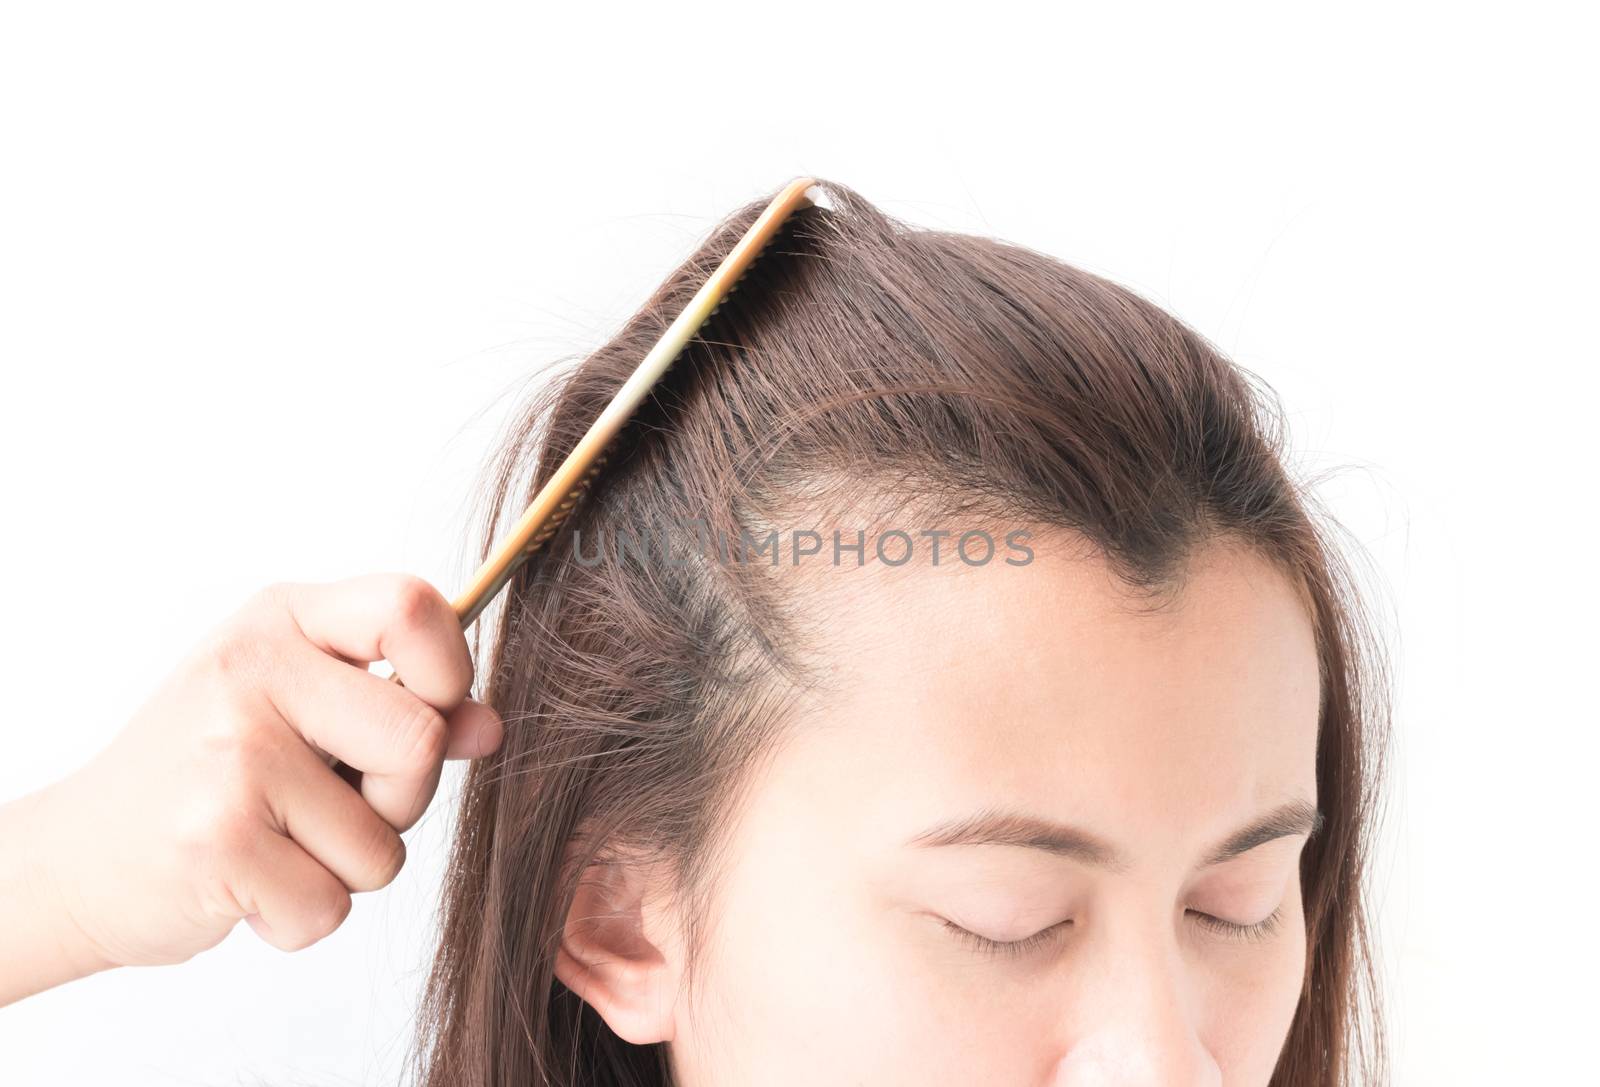 Woman serious hair loss problem for health care shampoo and beau by pt.pongsak@gmail.com